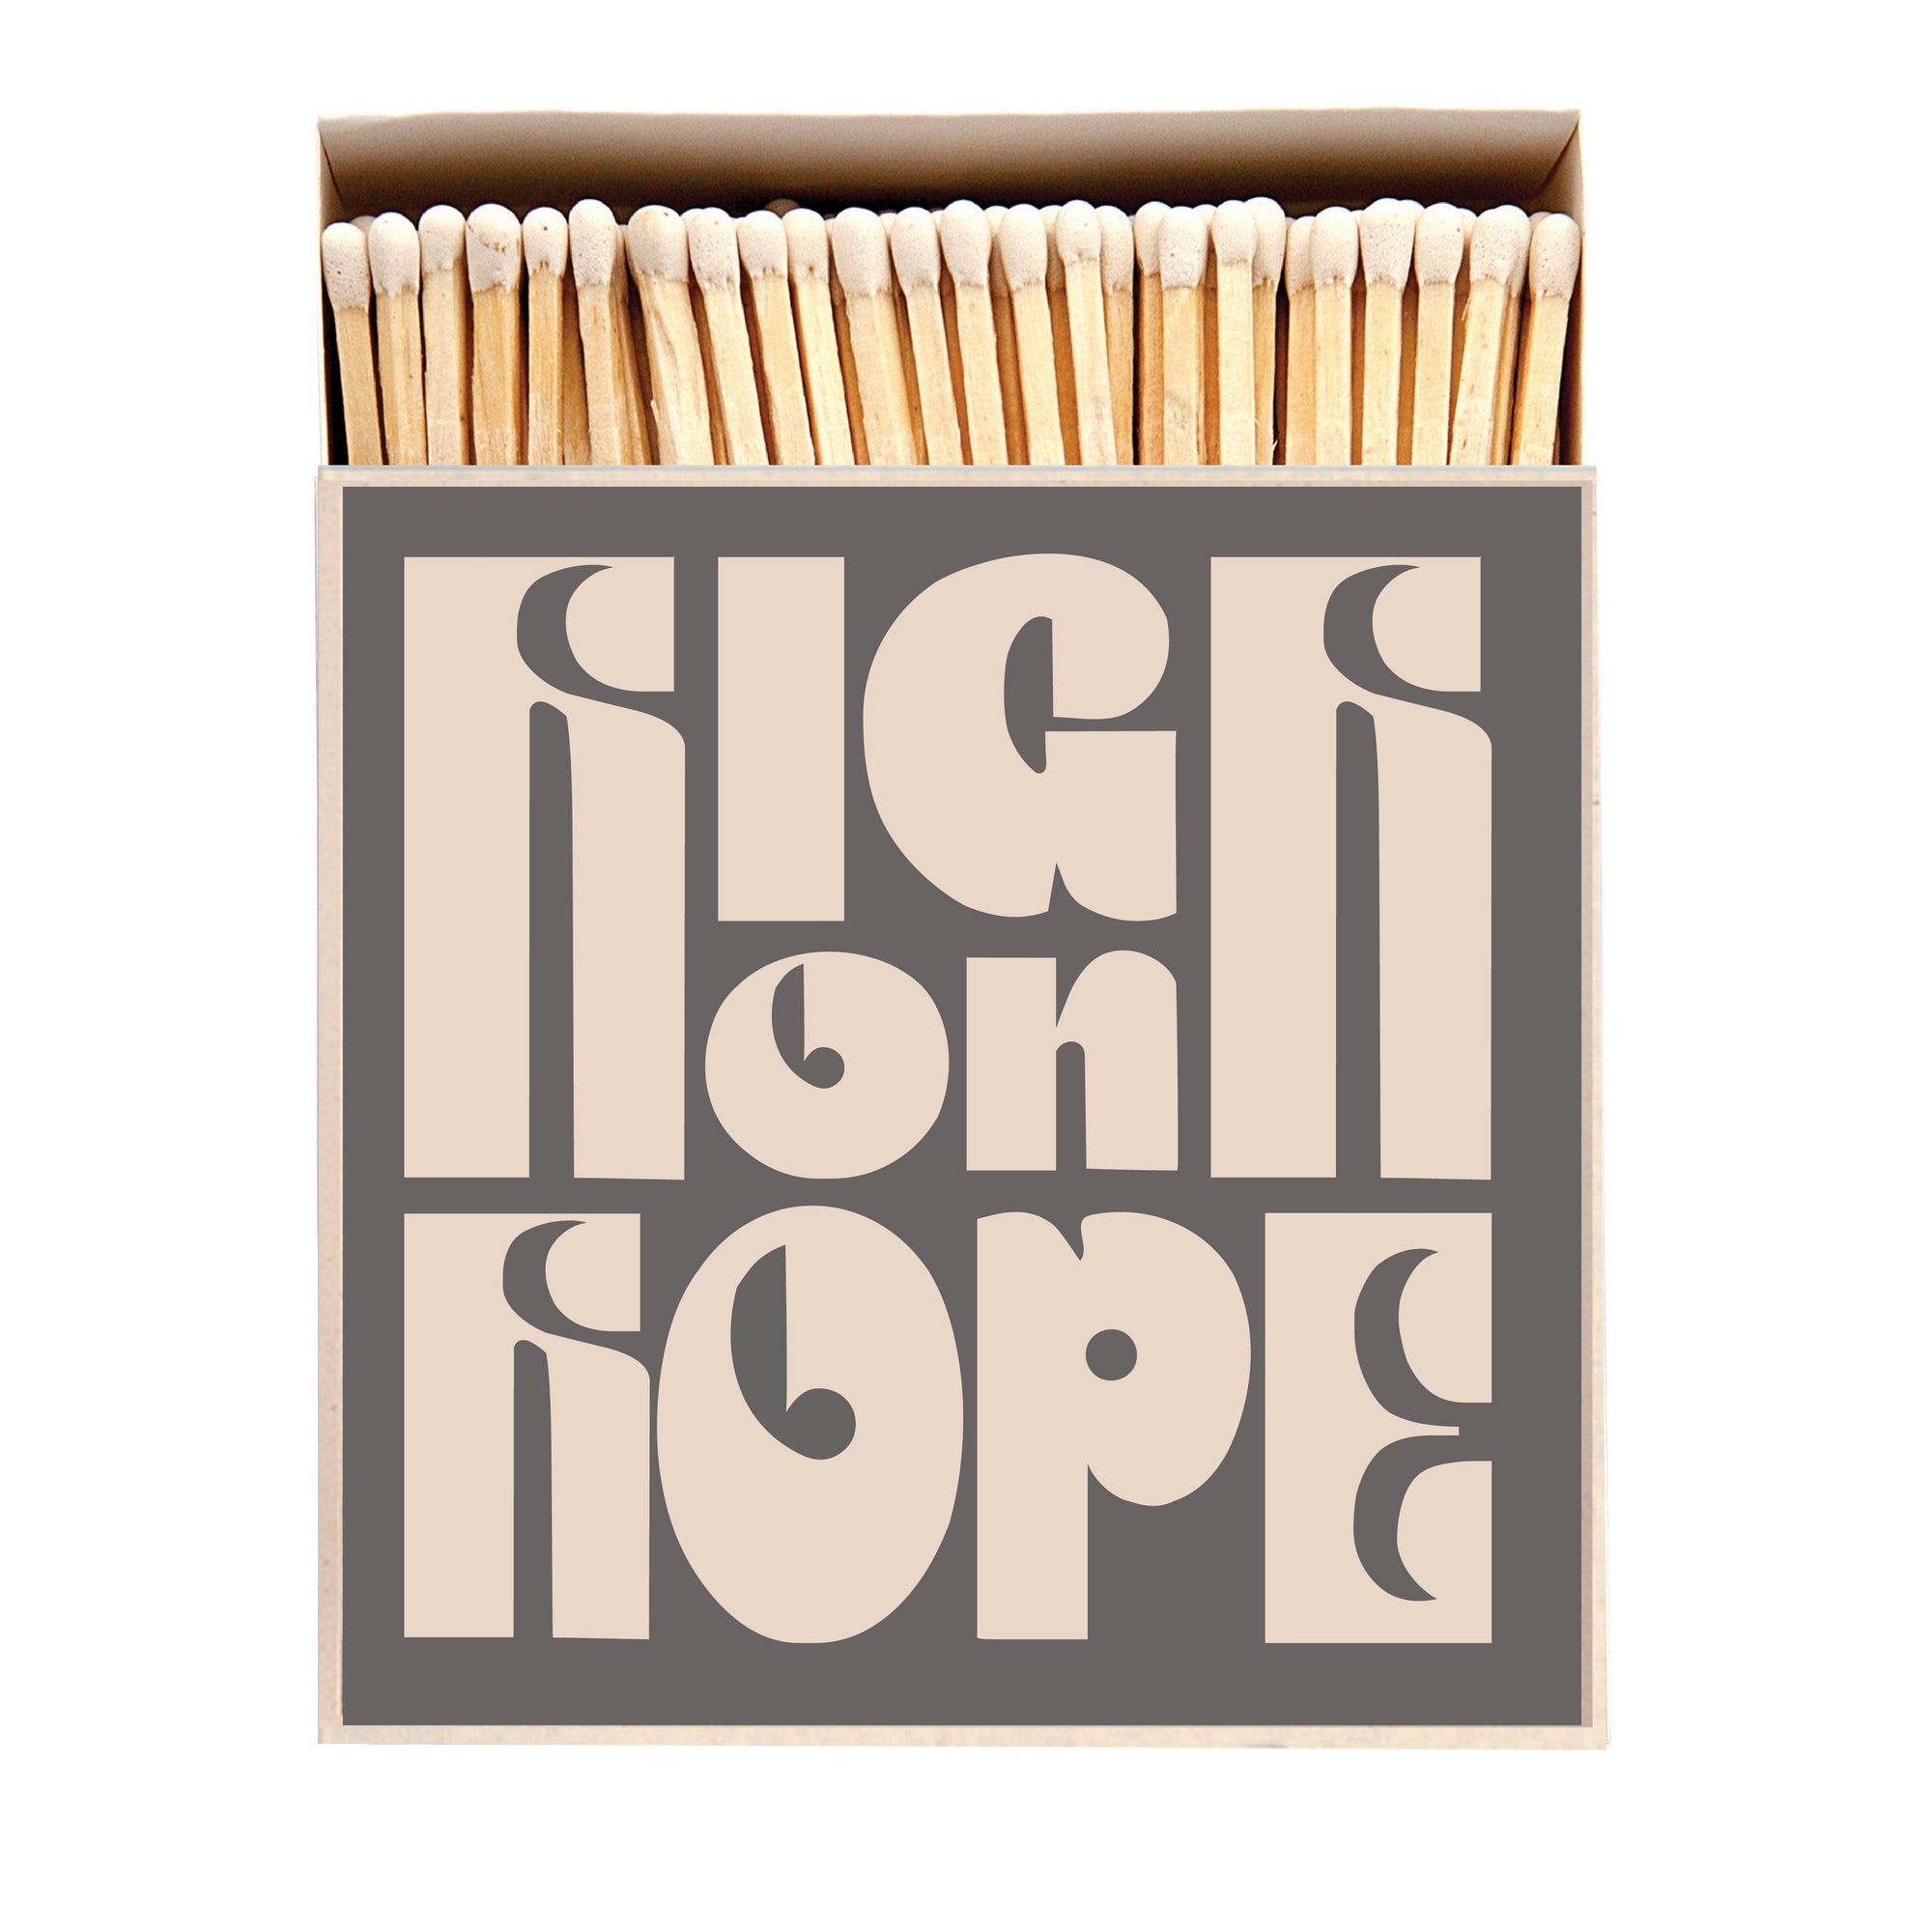 High on Hope Match Box | Real Fun, Wow!